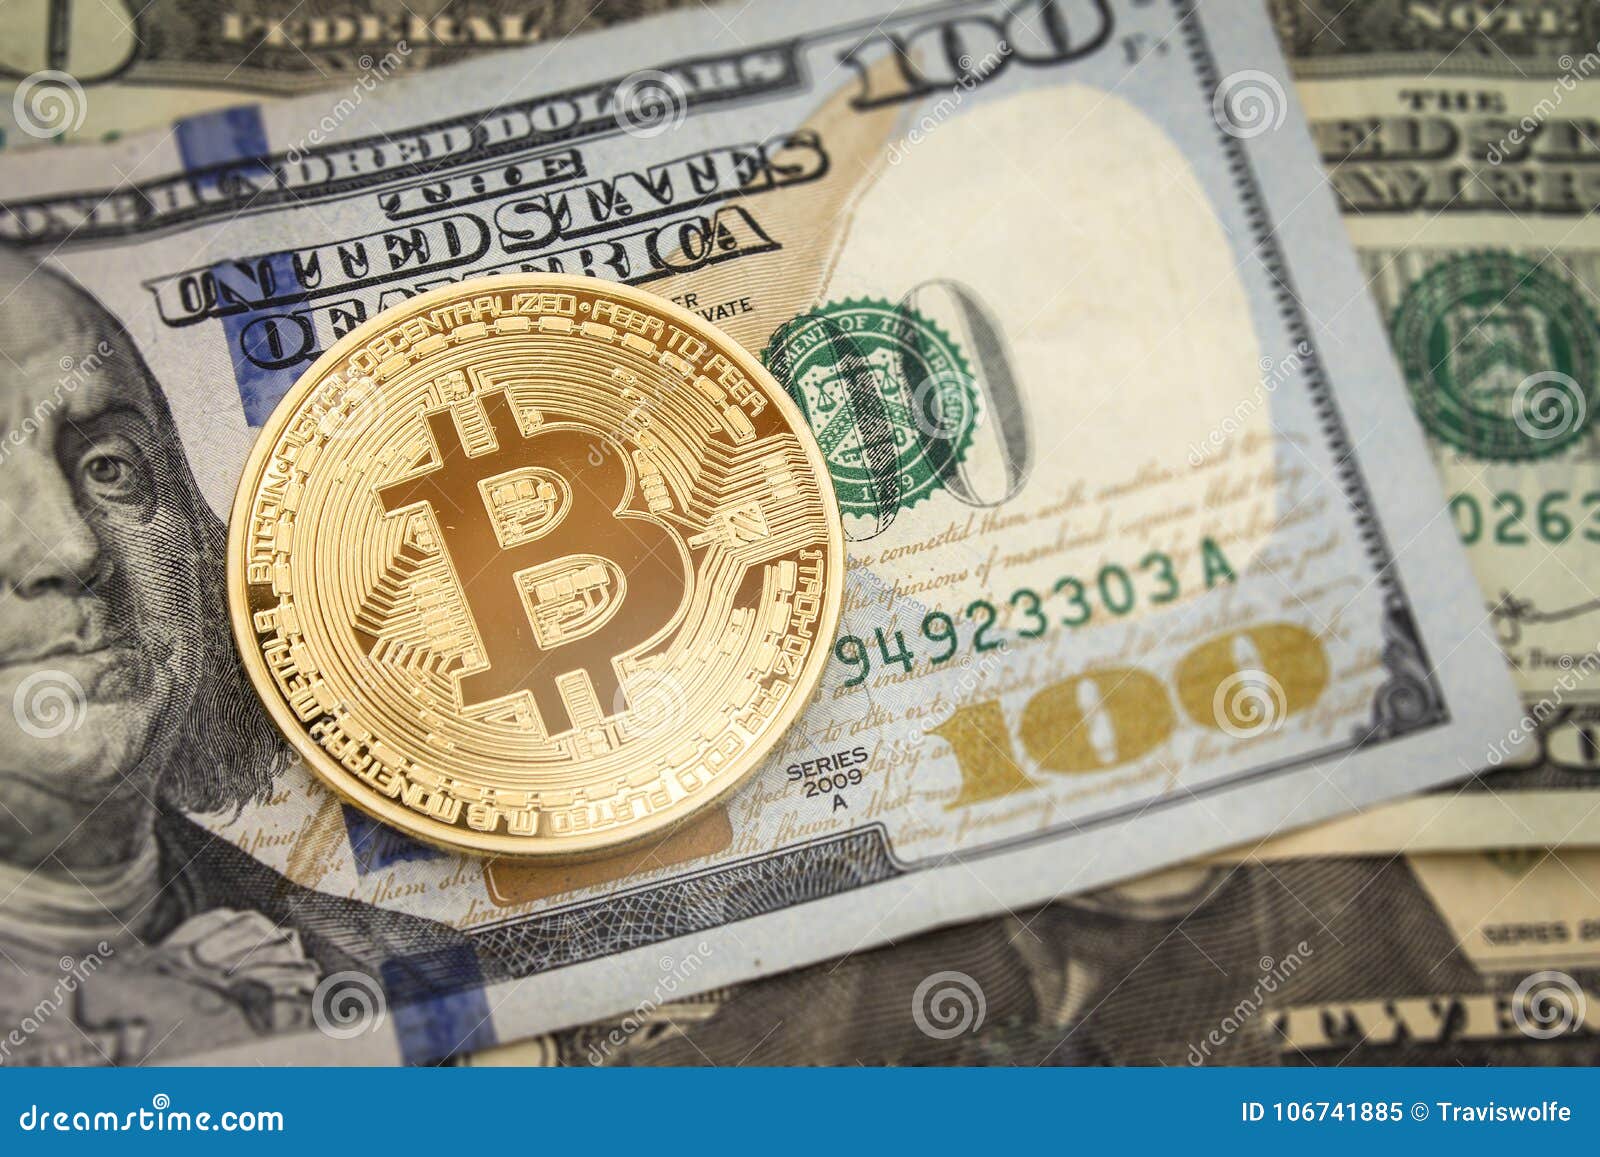 come girare bitcoin in dollari usa anti bitcoin